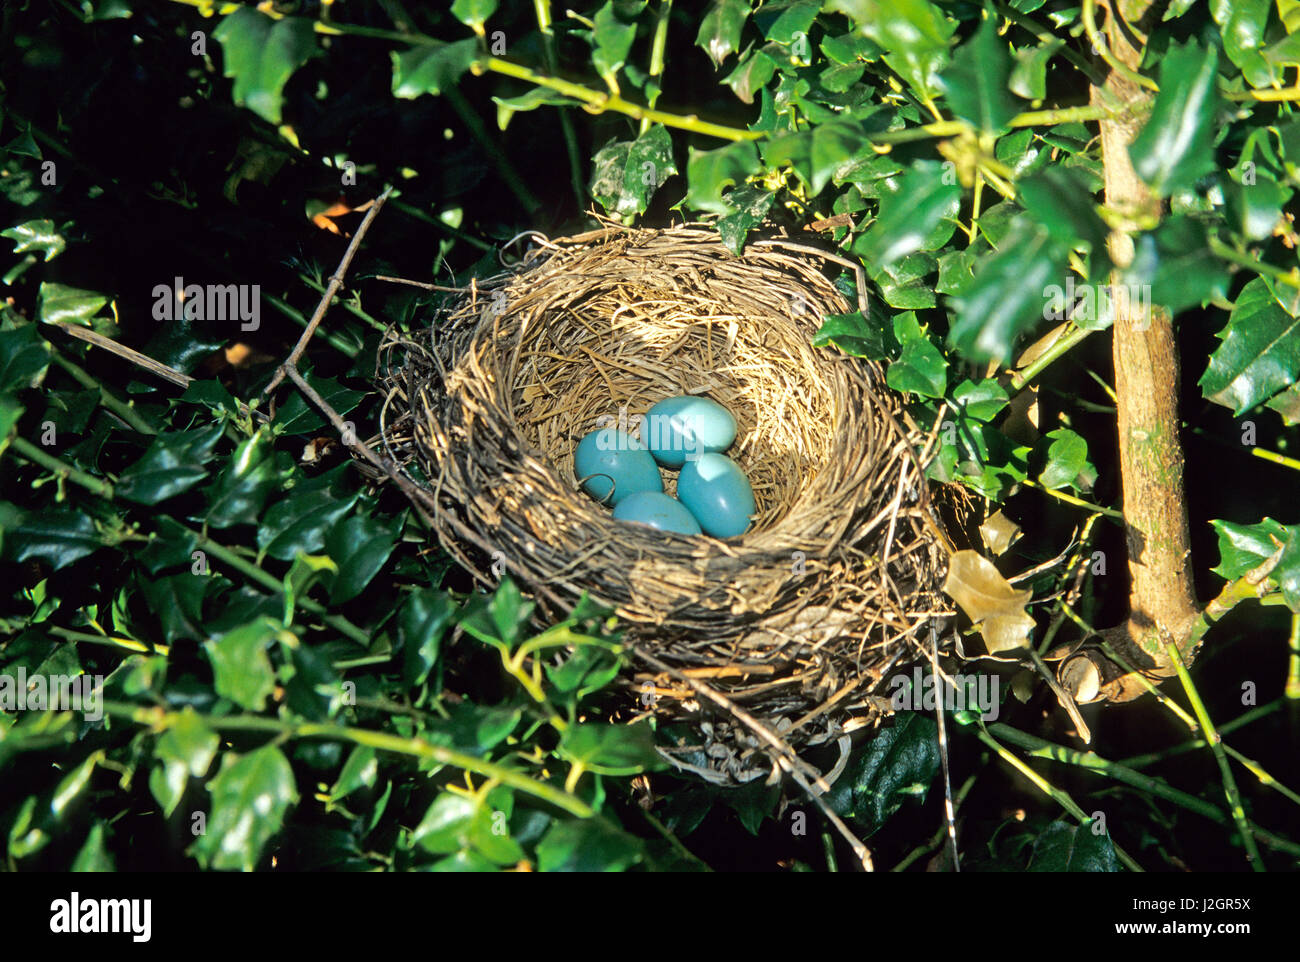 American Robin (Turdus migratorius) nest with 4 eggs in holly bush, Marion, IL Stock Photo